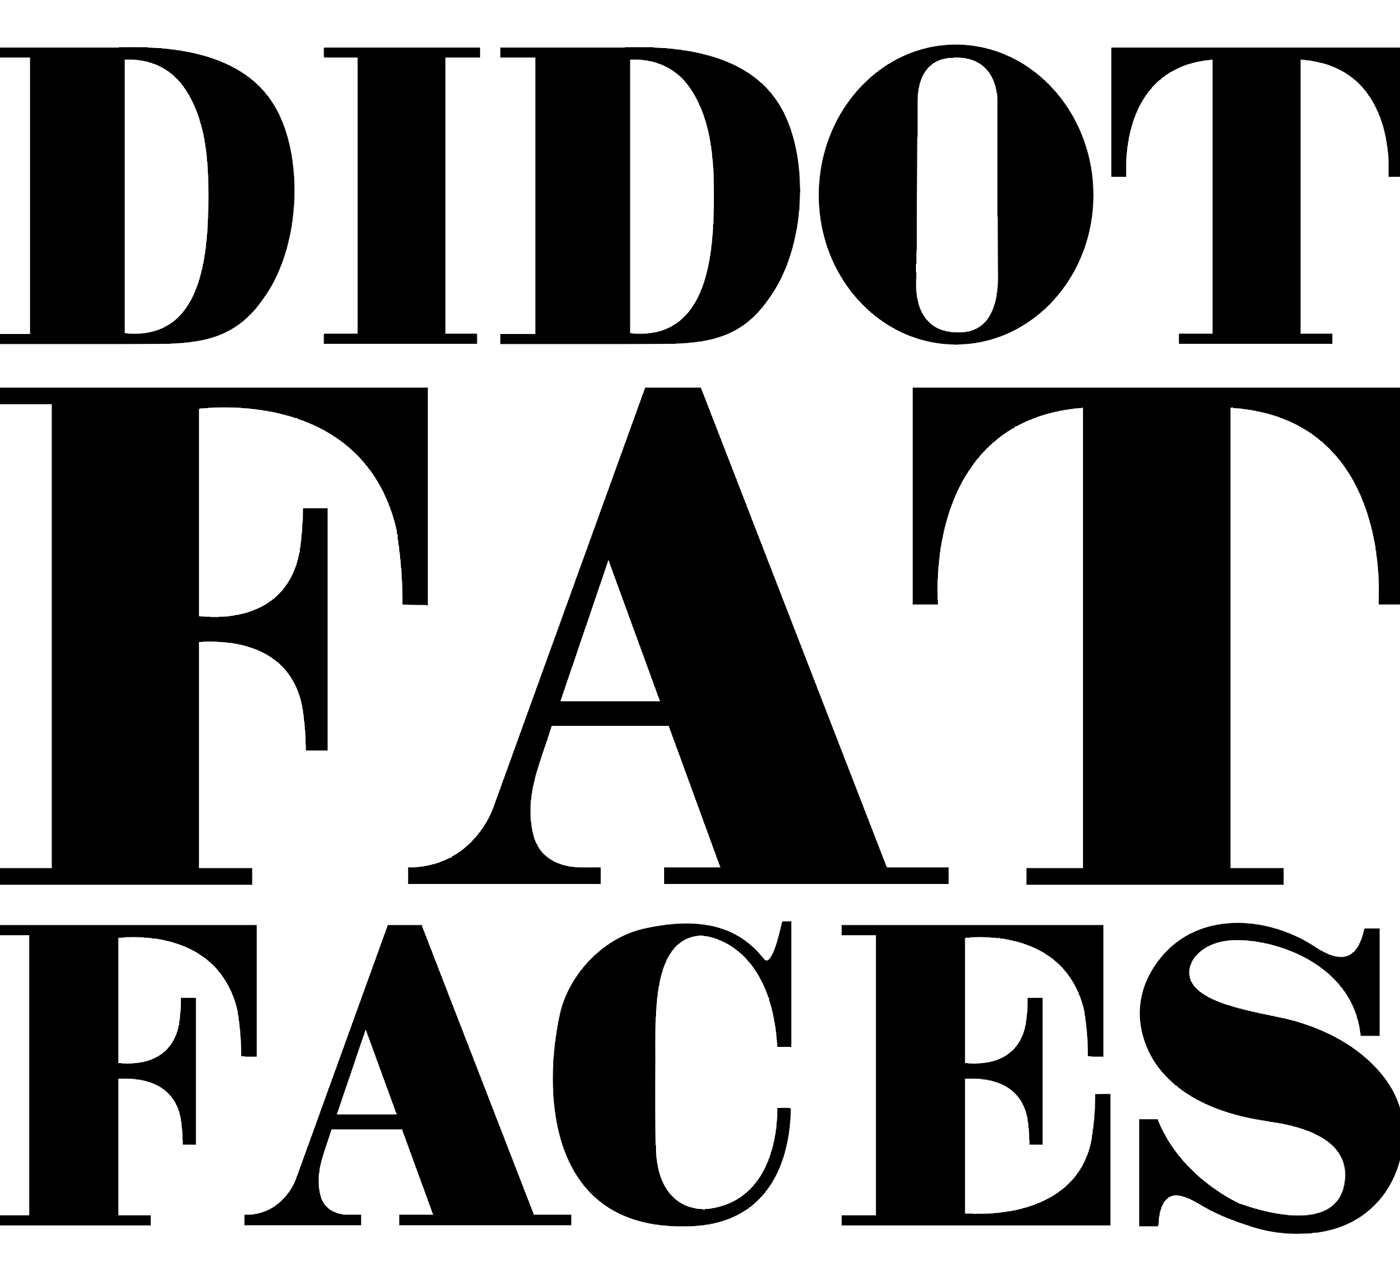 typefaces graphic Fat Faces font Free font fonts freefont editorial editorial design  book design